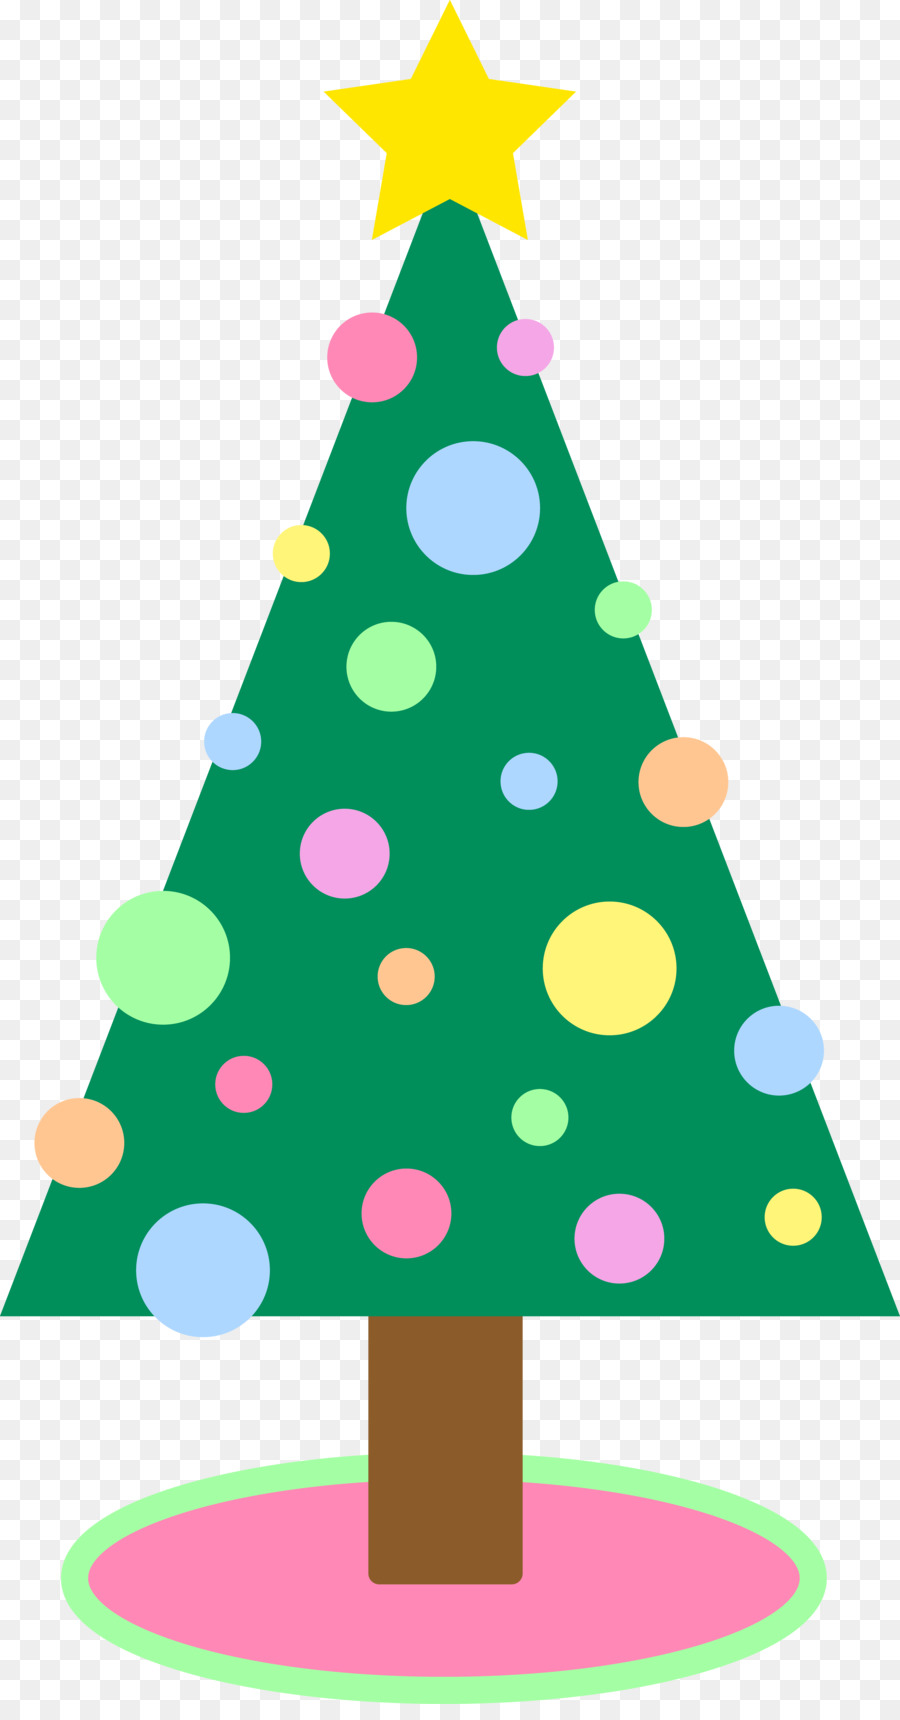 Christmas Tree Ornaments clipart